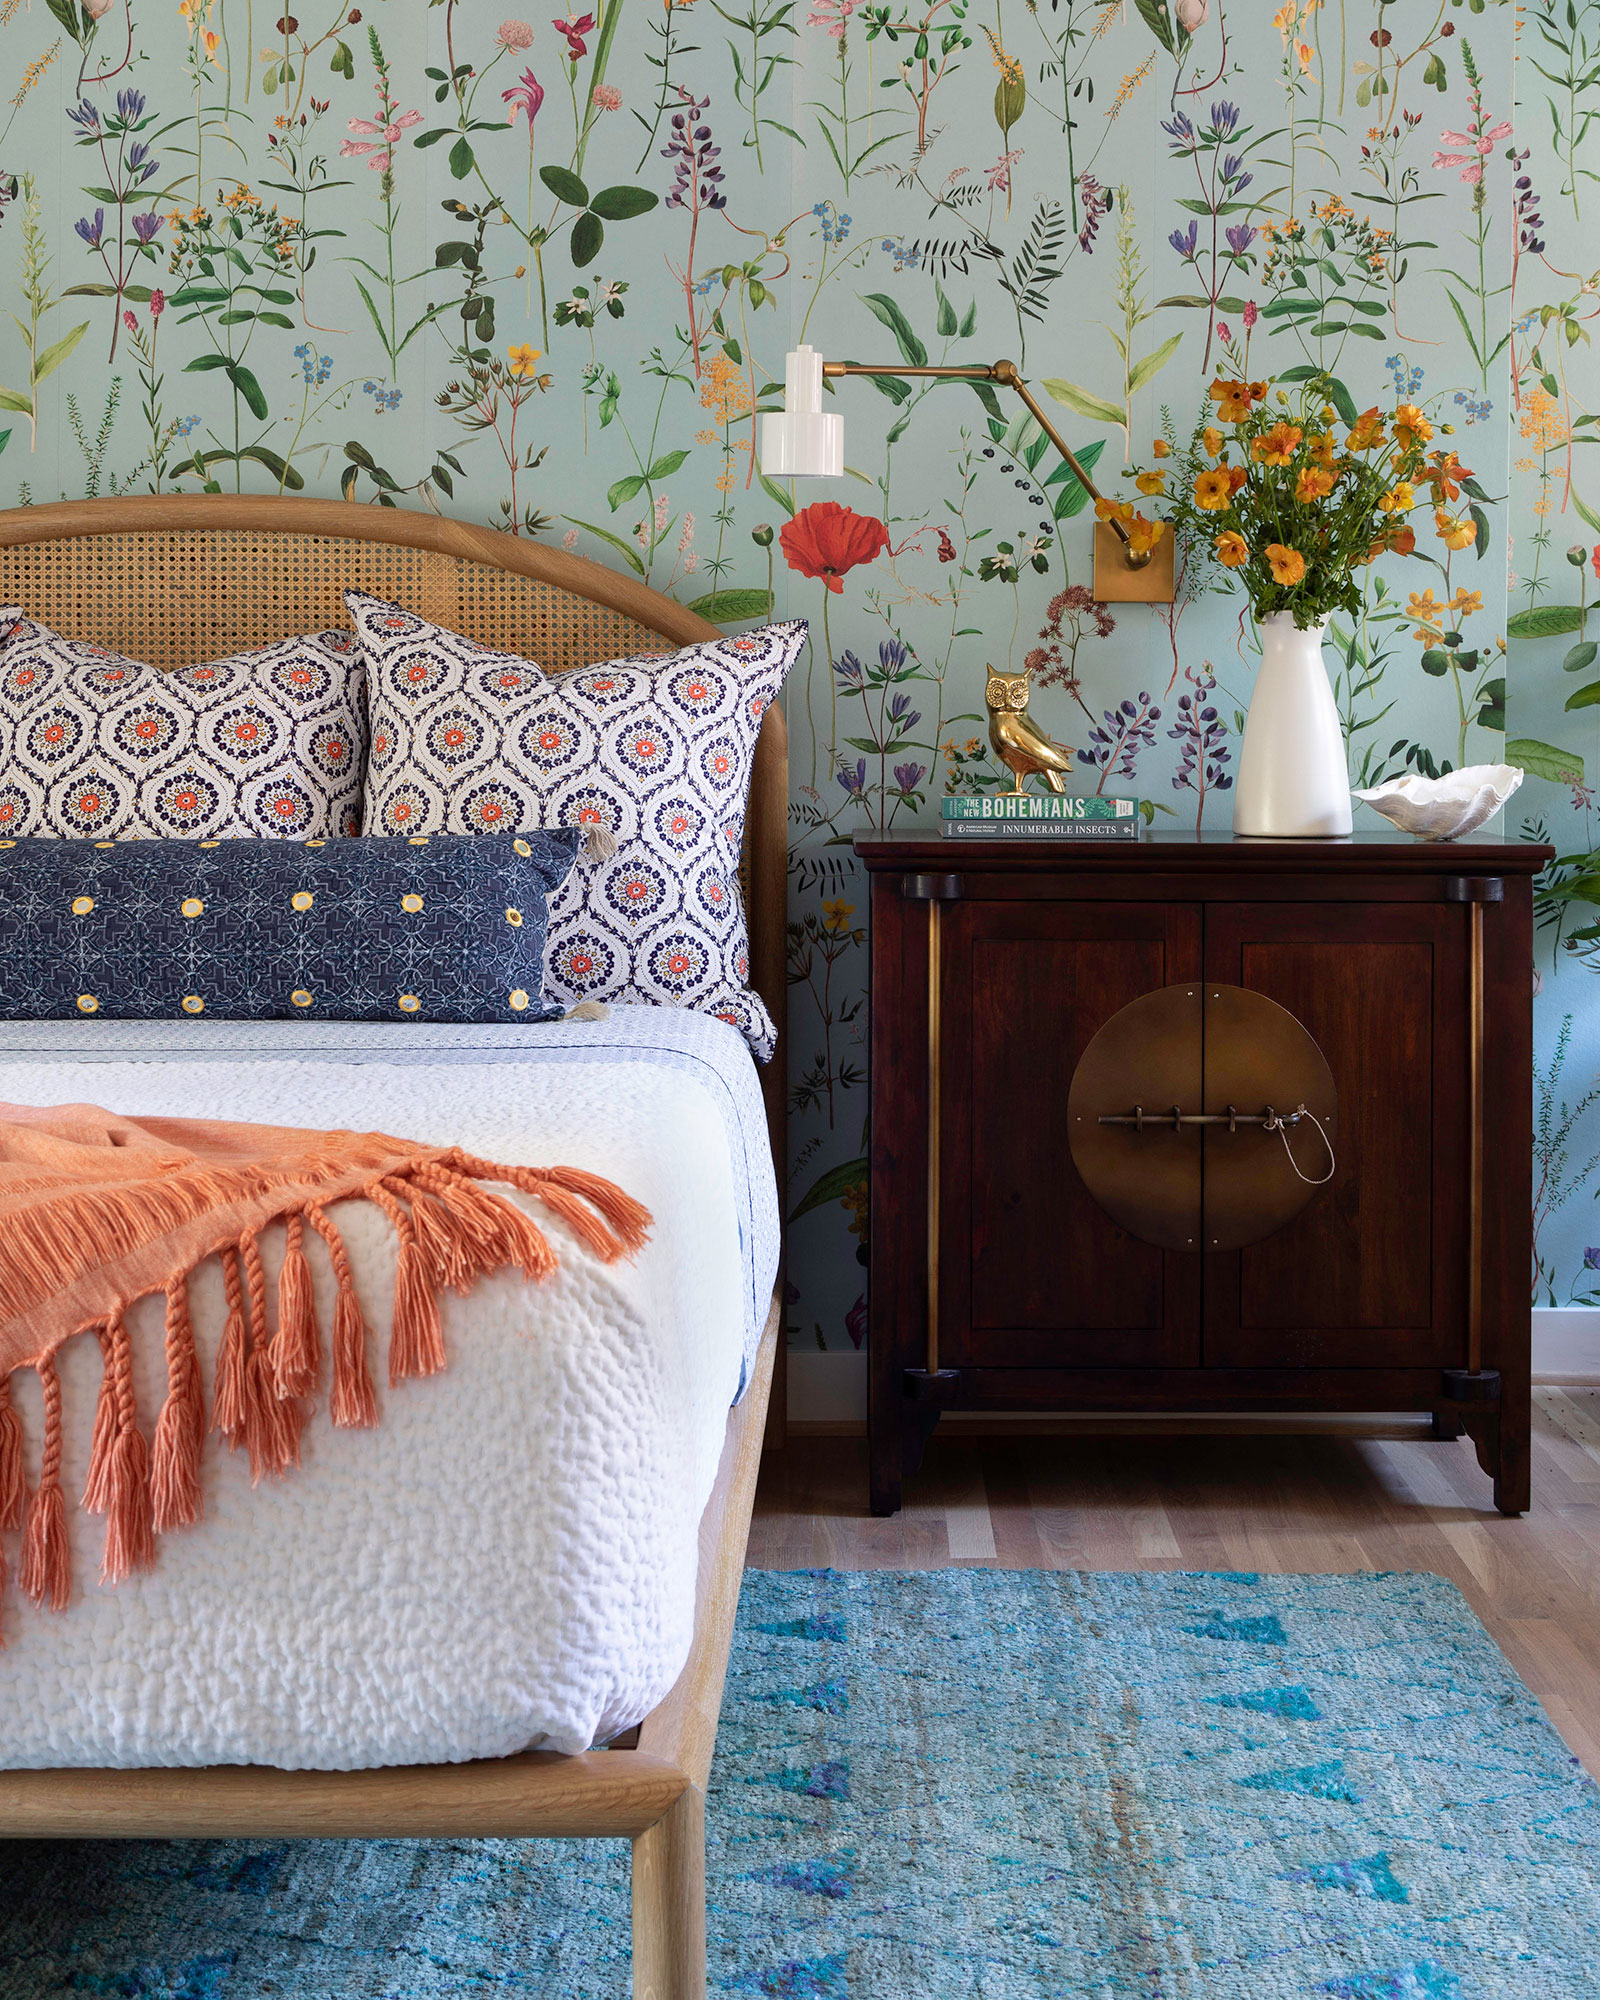 Bed with Floral Wallpaper | Best Imaginative Bedroom Design Ideas